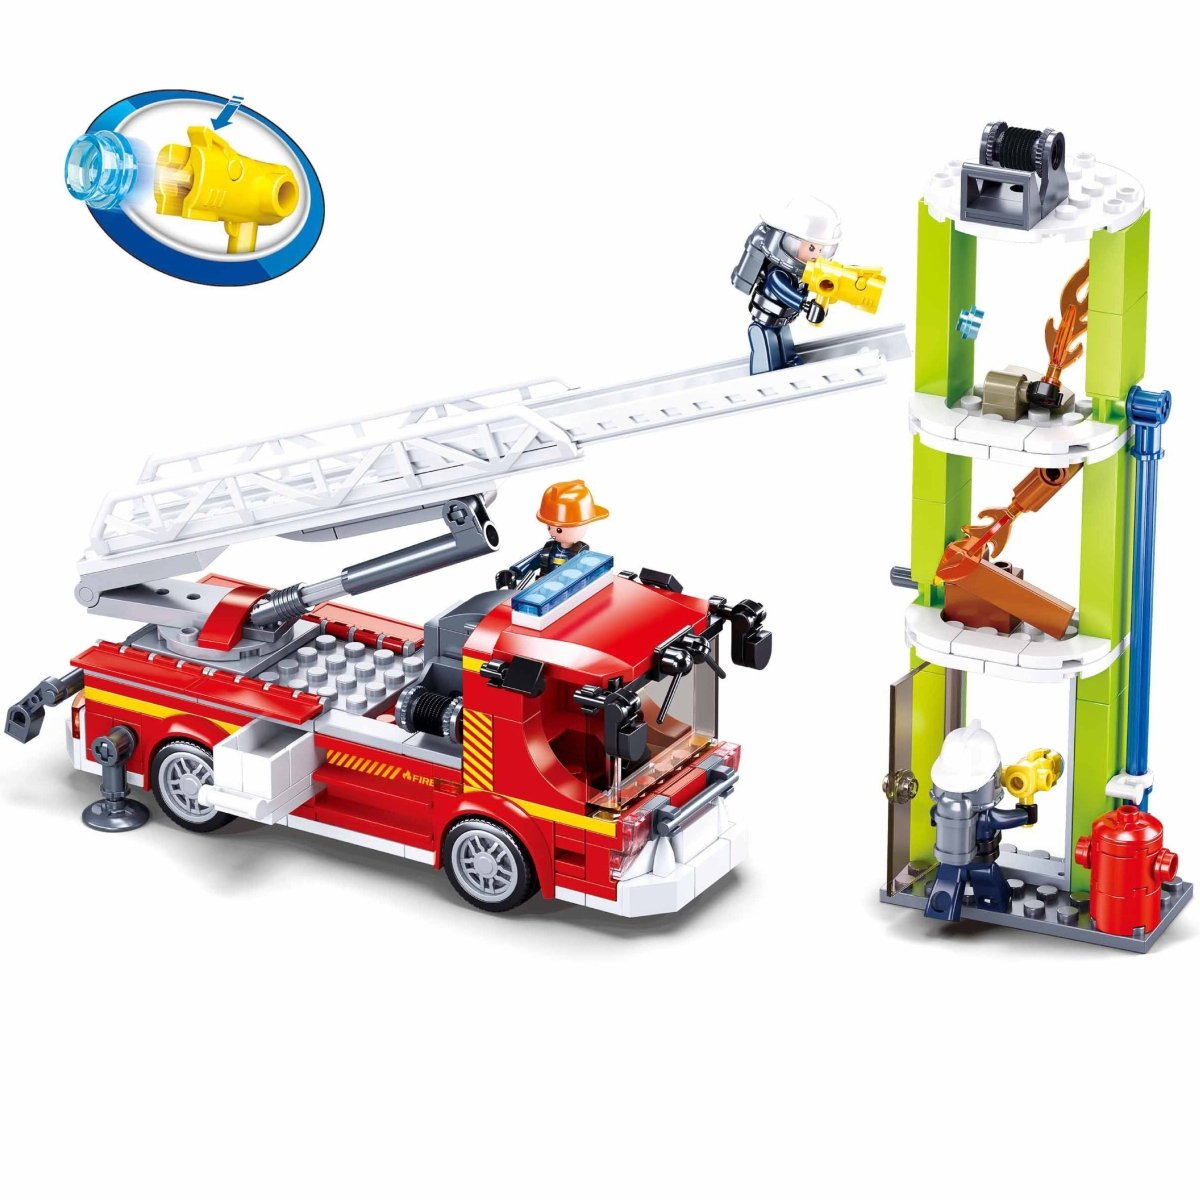 SLUBAN Building Blocks Kit for Boys and Girls - Fire Engine - M38-B0966